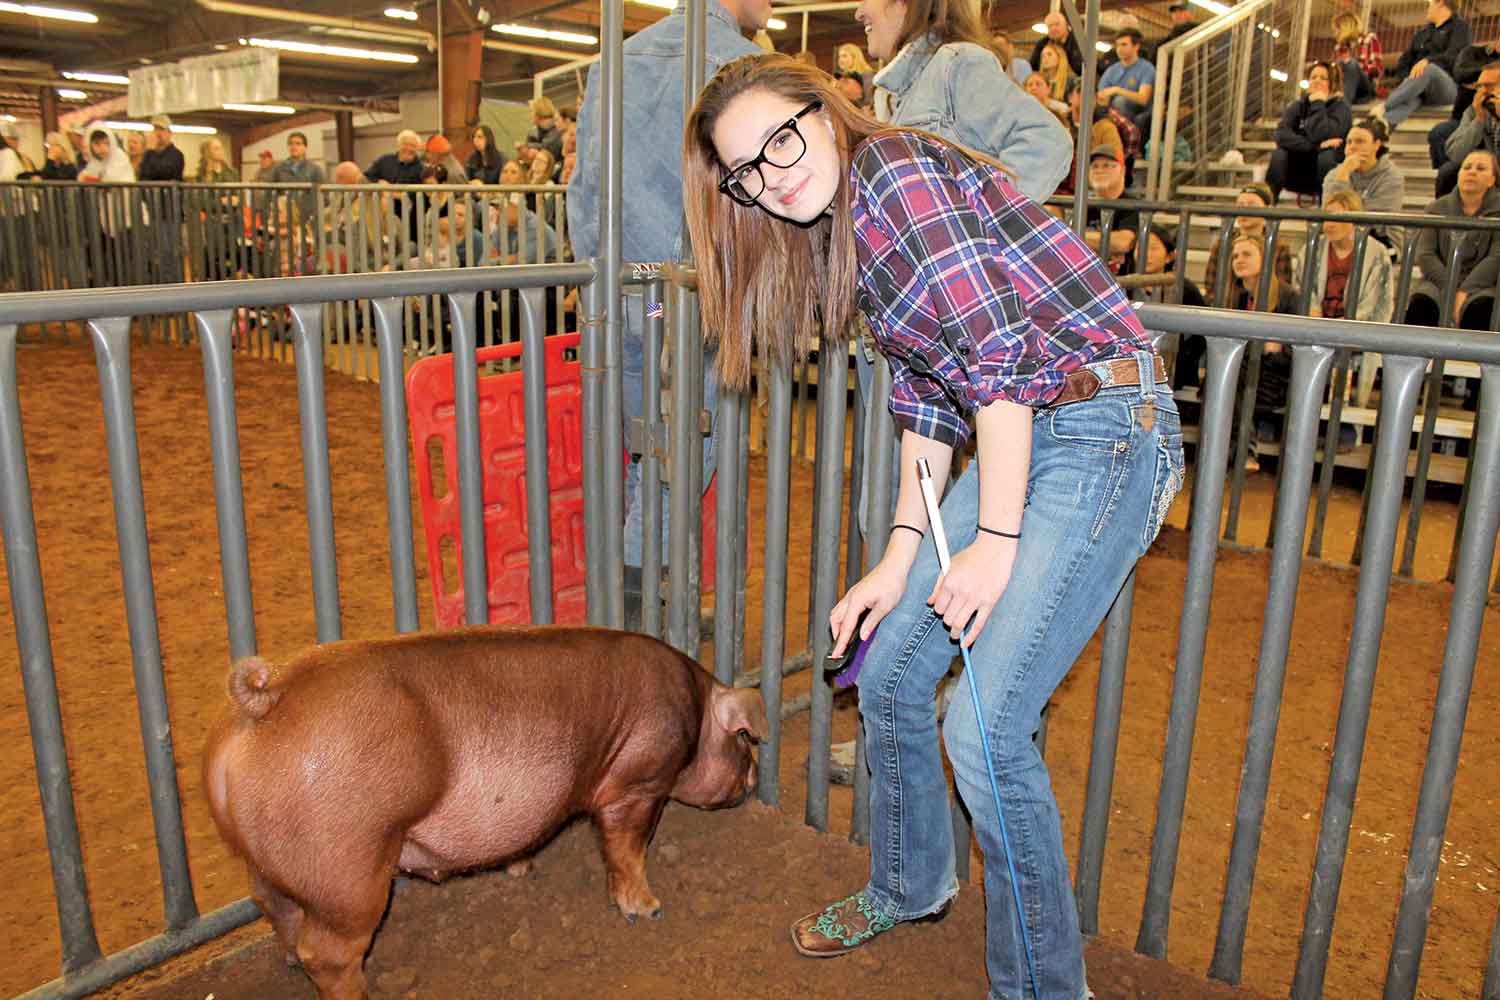 County livestock show opens Jan. 7